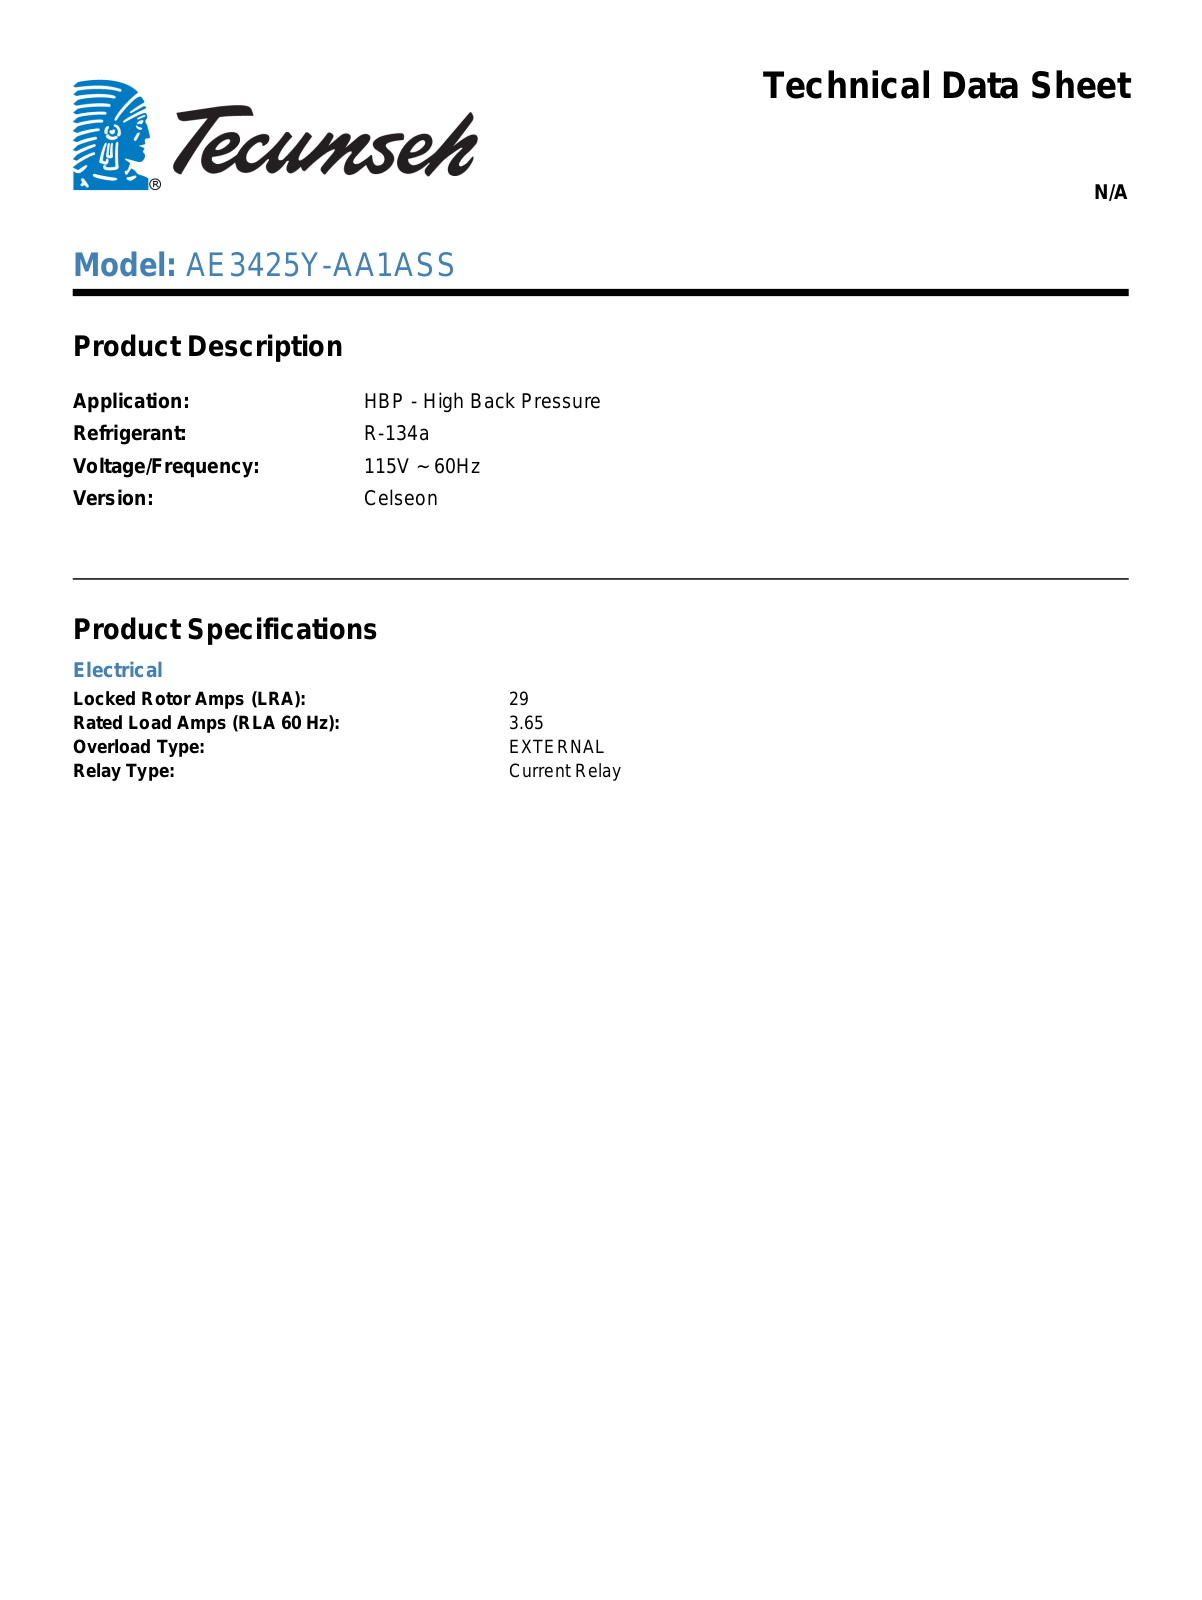 Tecumseh AE3425Y-AA1ASS User Manual